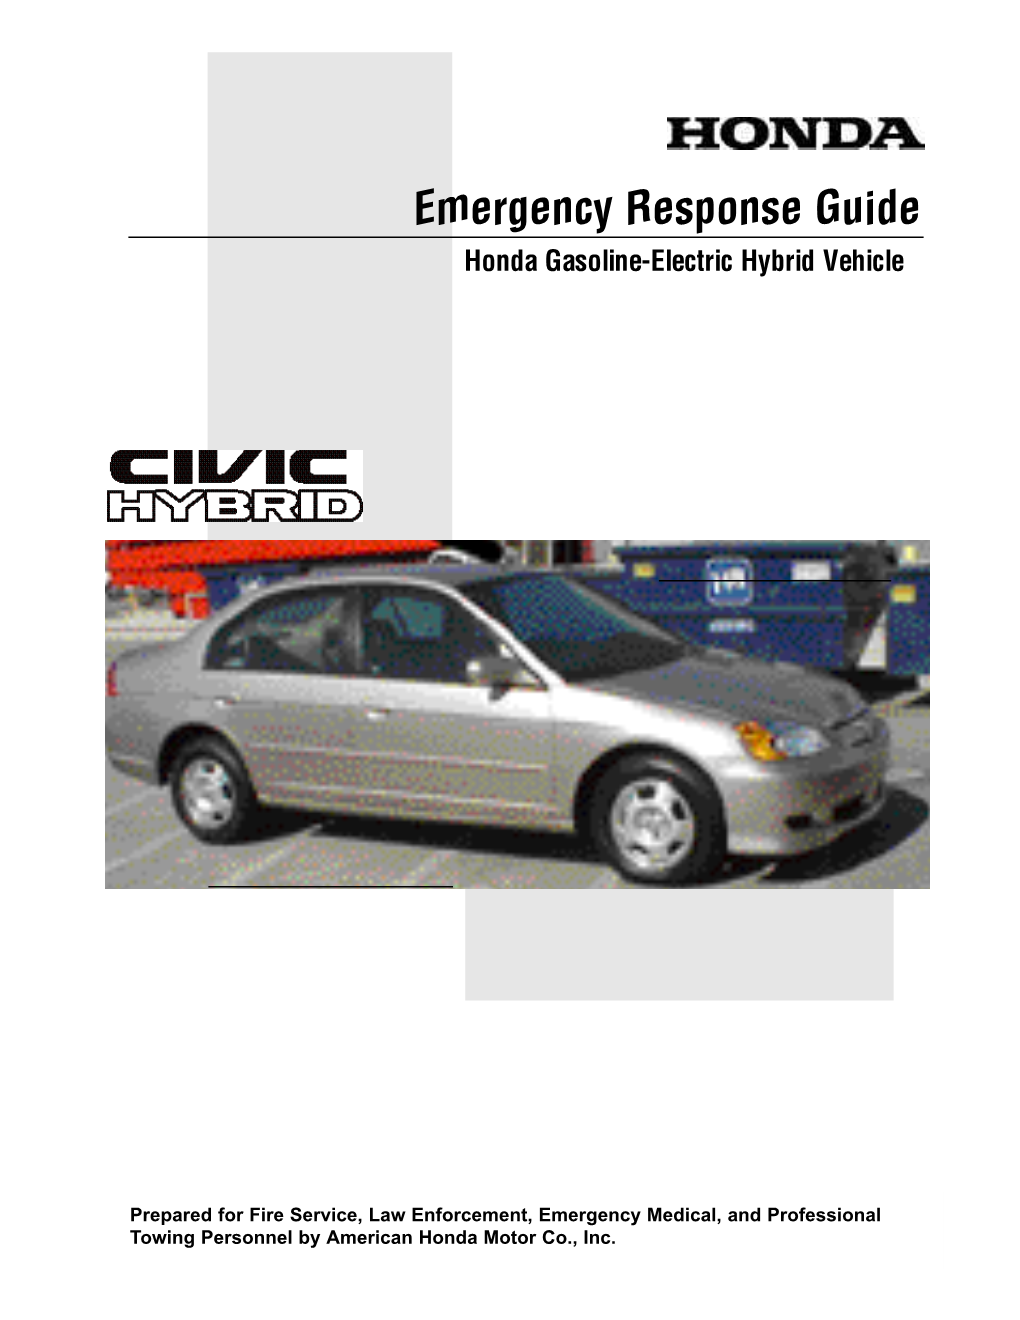 Emergency Response Guide Honda Gasoline-Electric Hybrid Vehicle